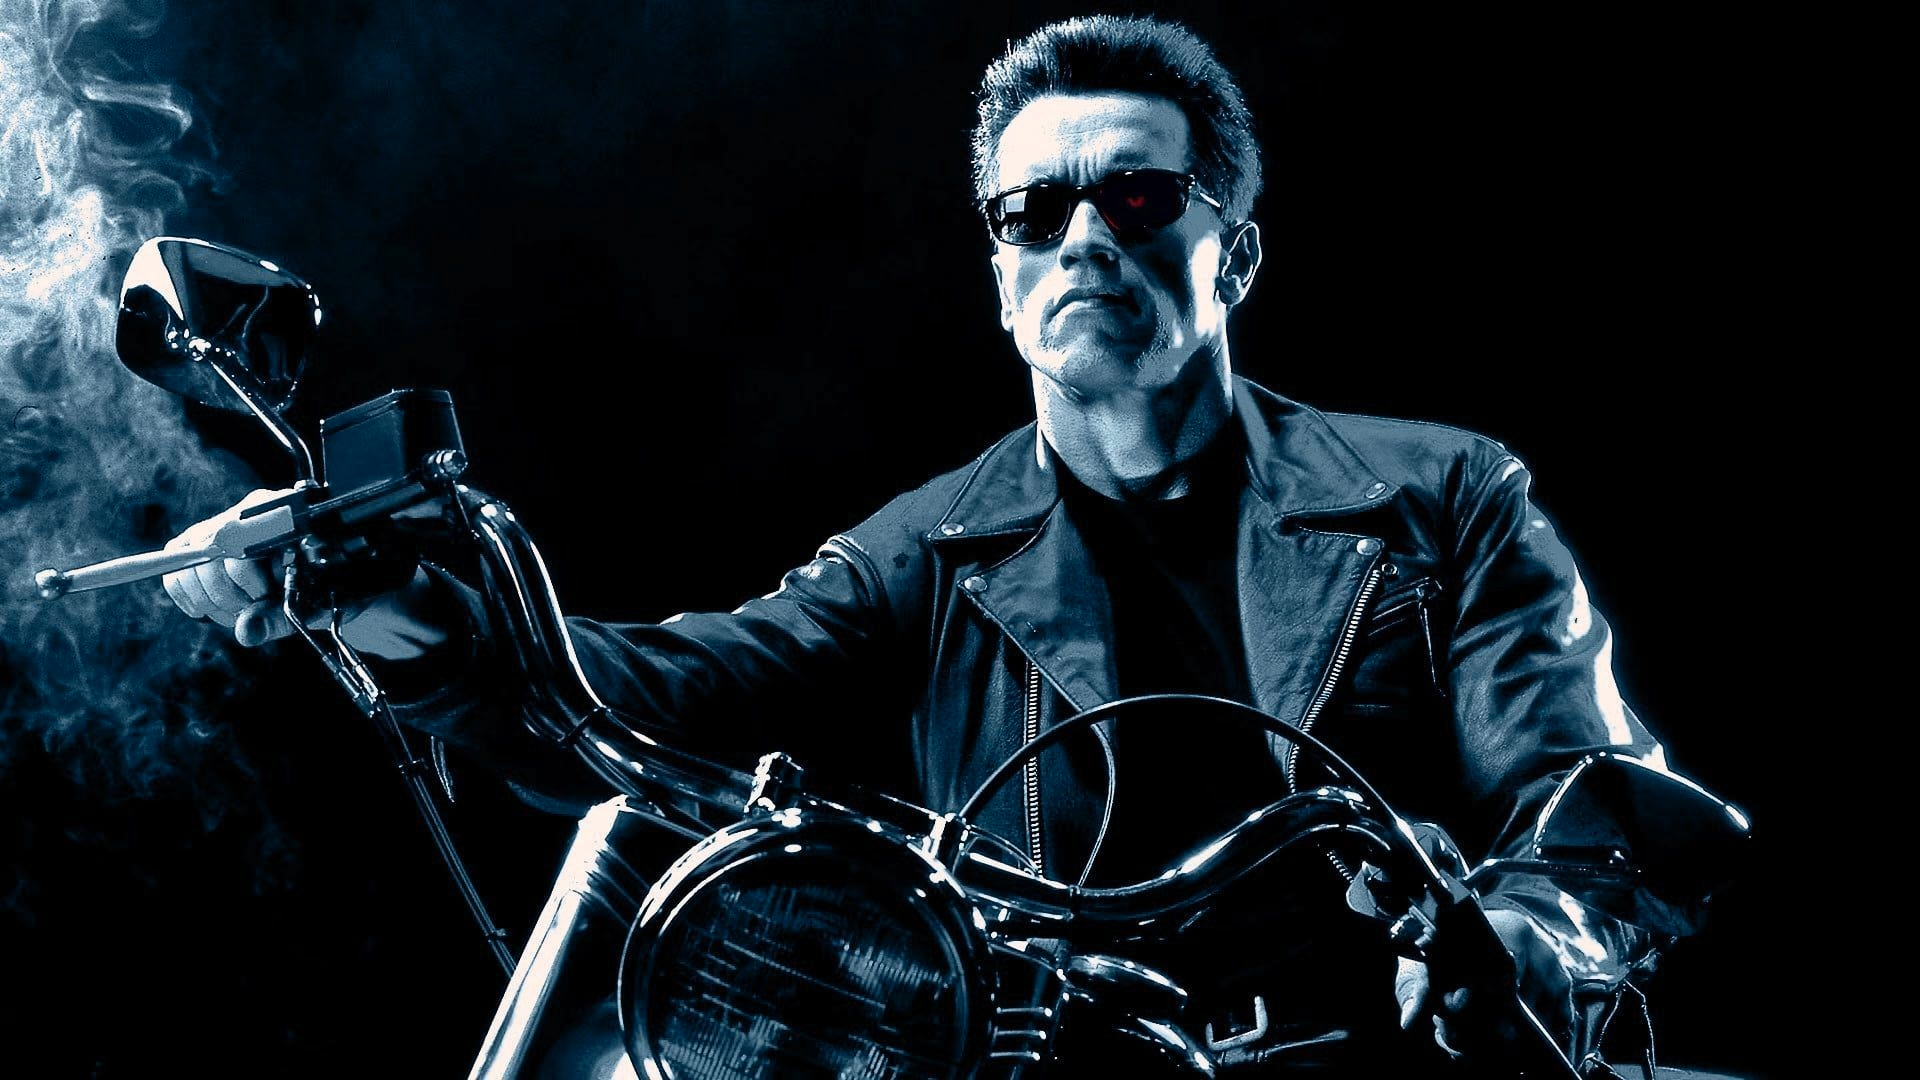 “Terminator 2” enters the US National Film Registry